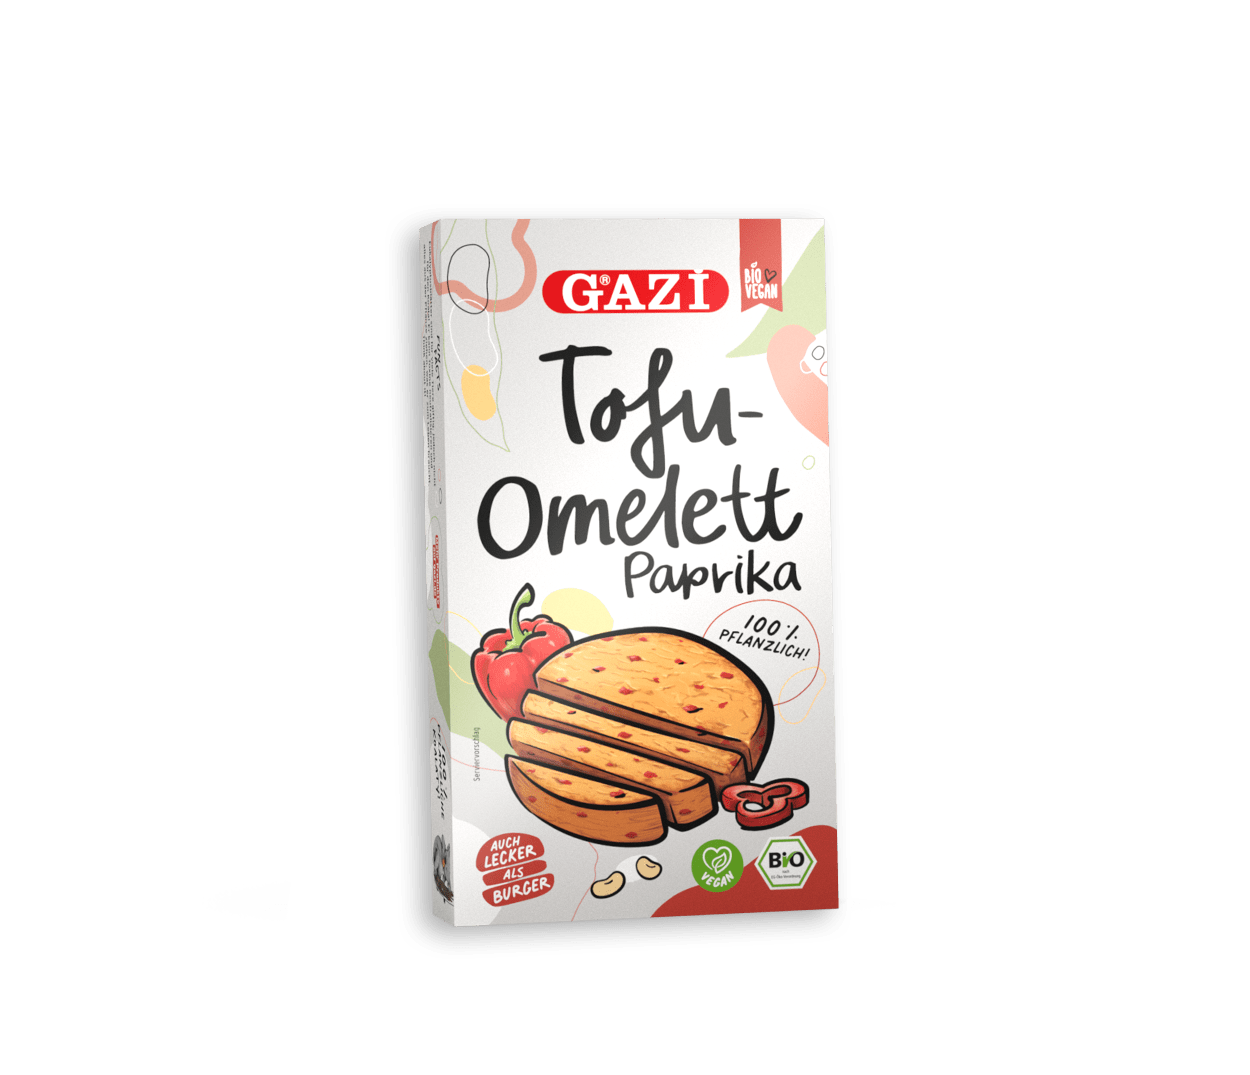 GAZi Vegan Tofu-Omelett